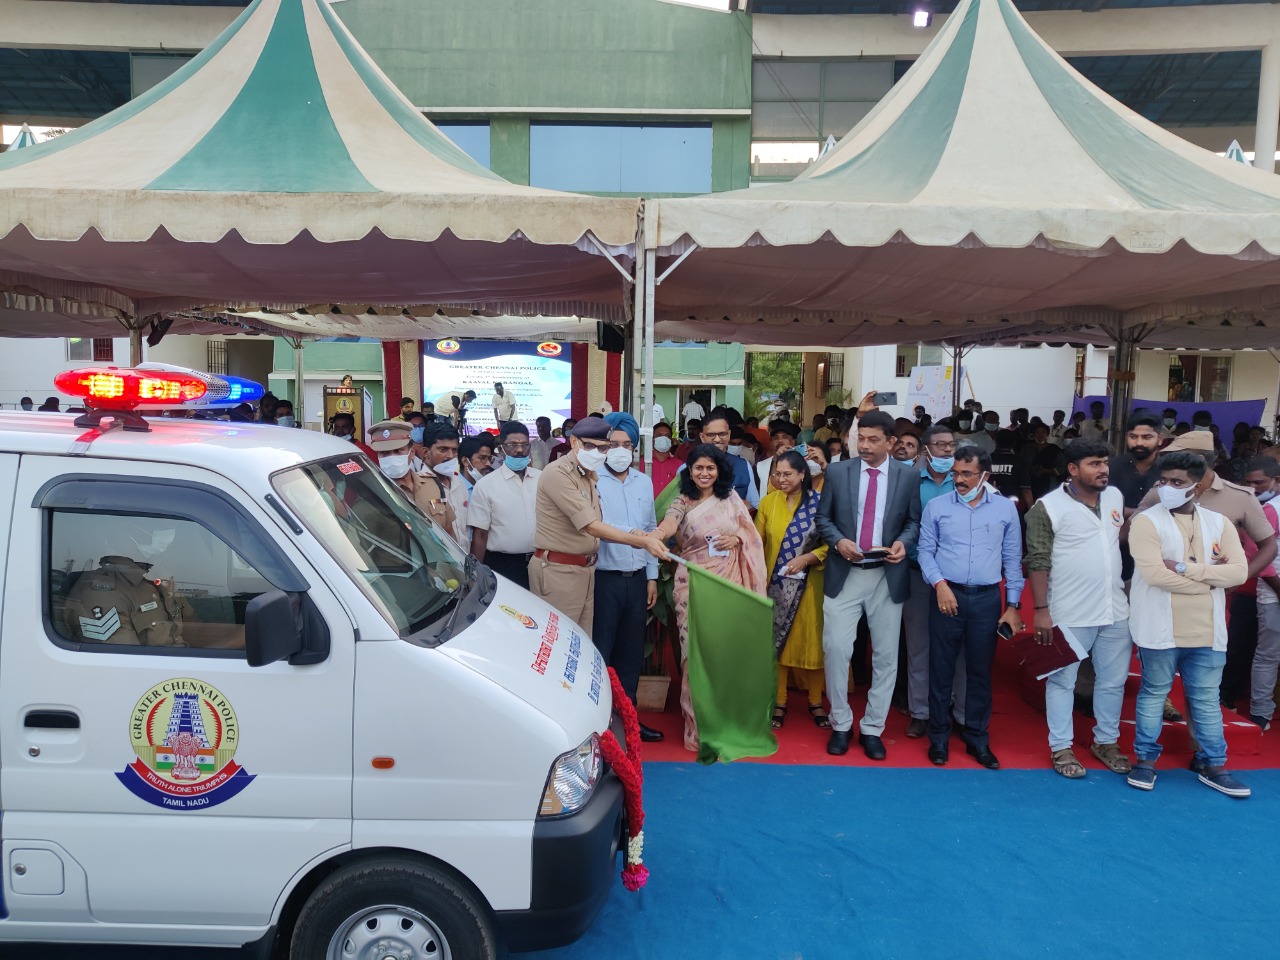 Surya donated the vehicle to the Chennai Metropolitan Police